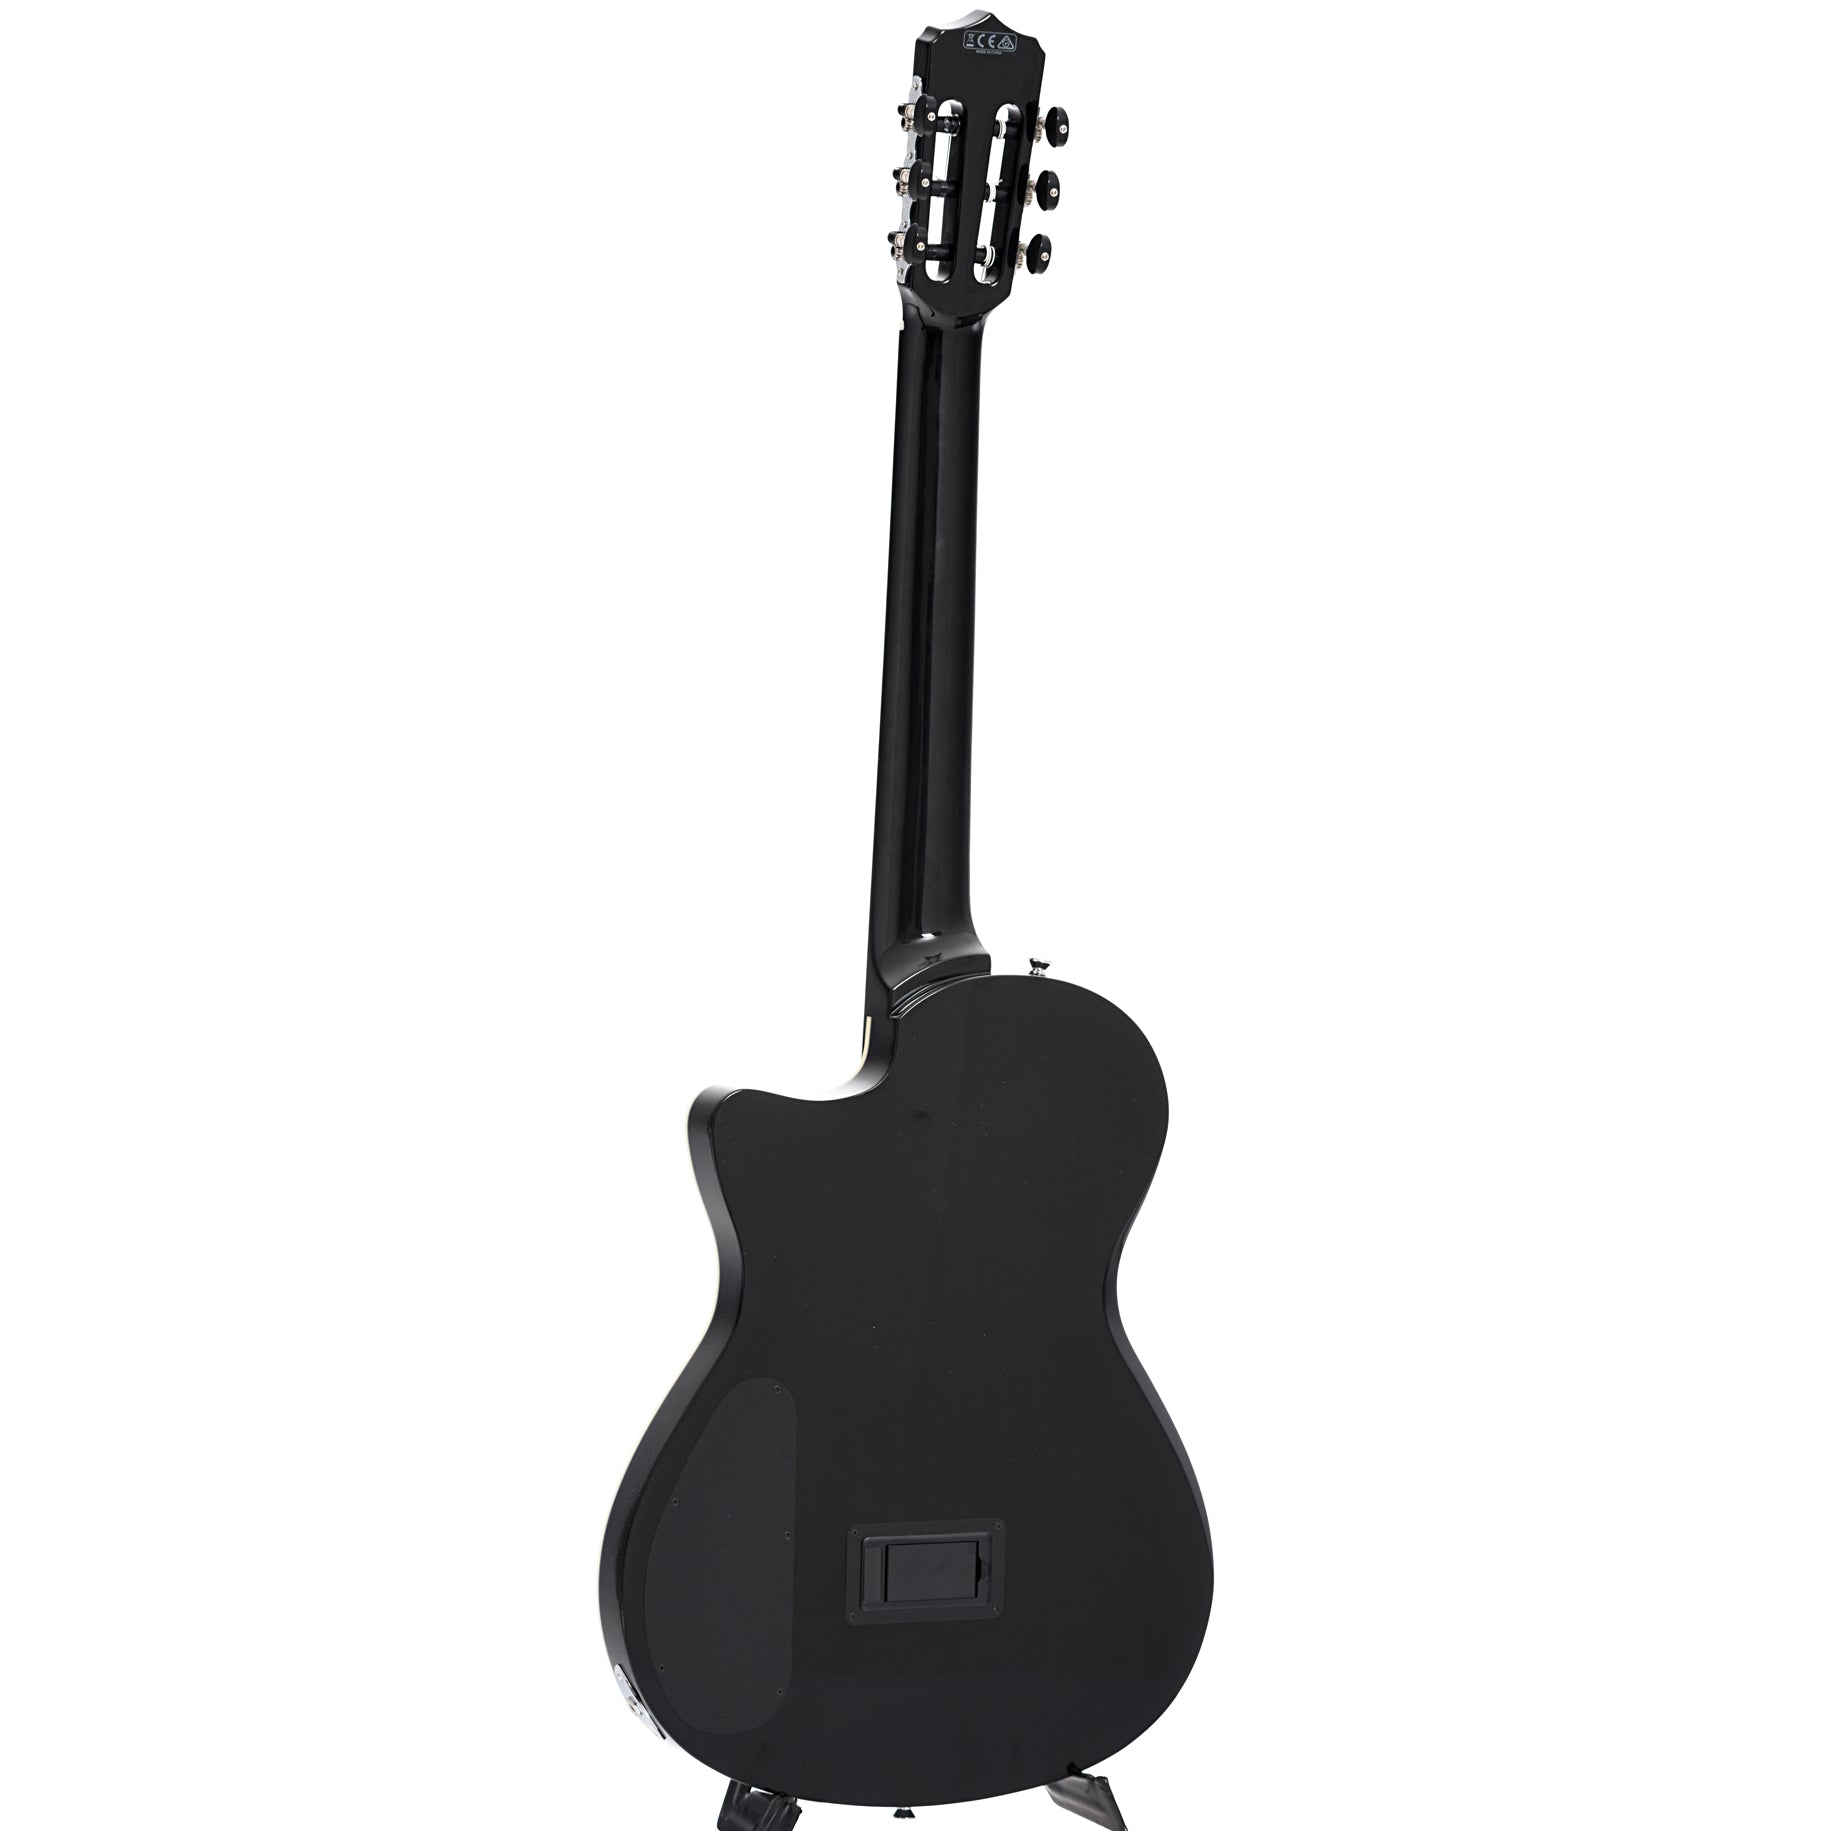 Full back and side of Cordoba Stage Black Burst Guitar